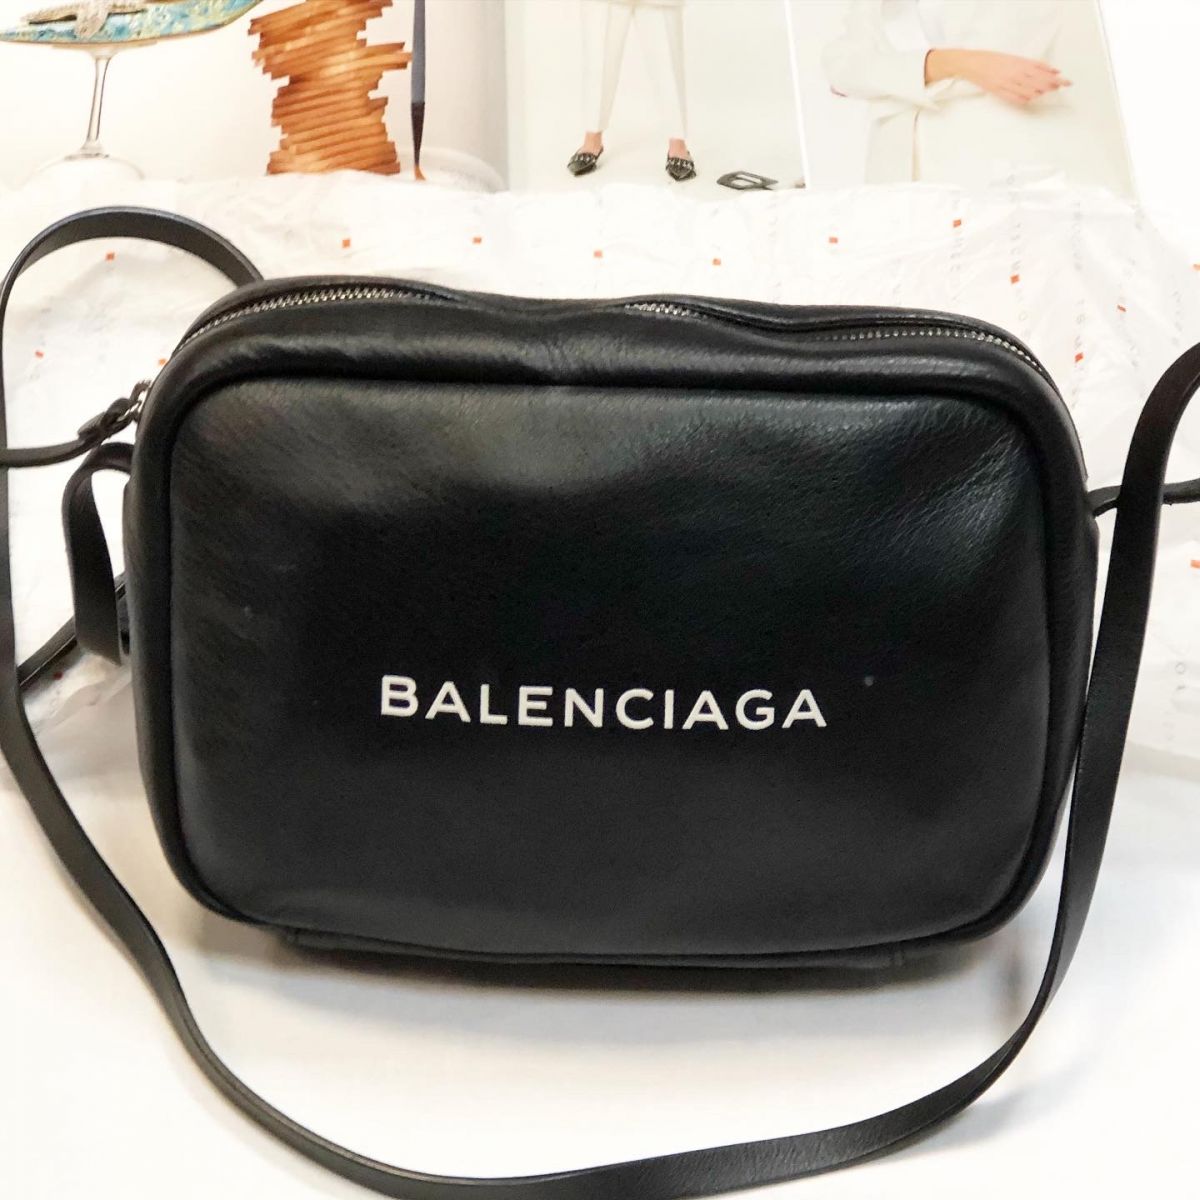 Сумка Balenciaga  размер 18/22 цена 30 770 руб